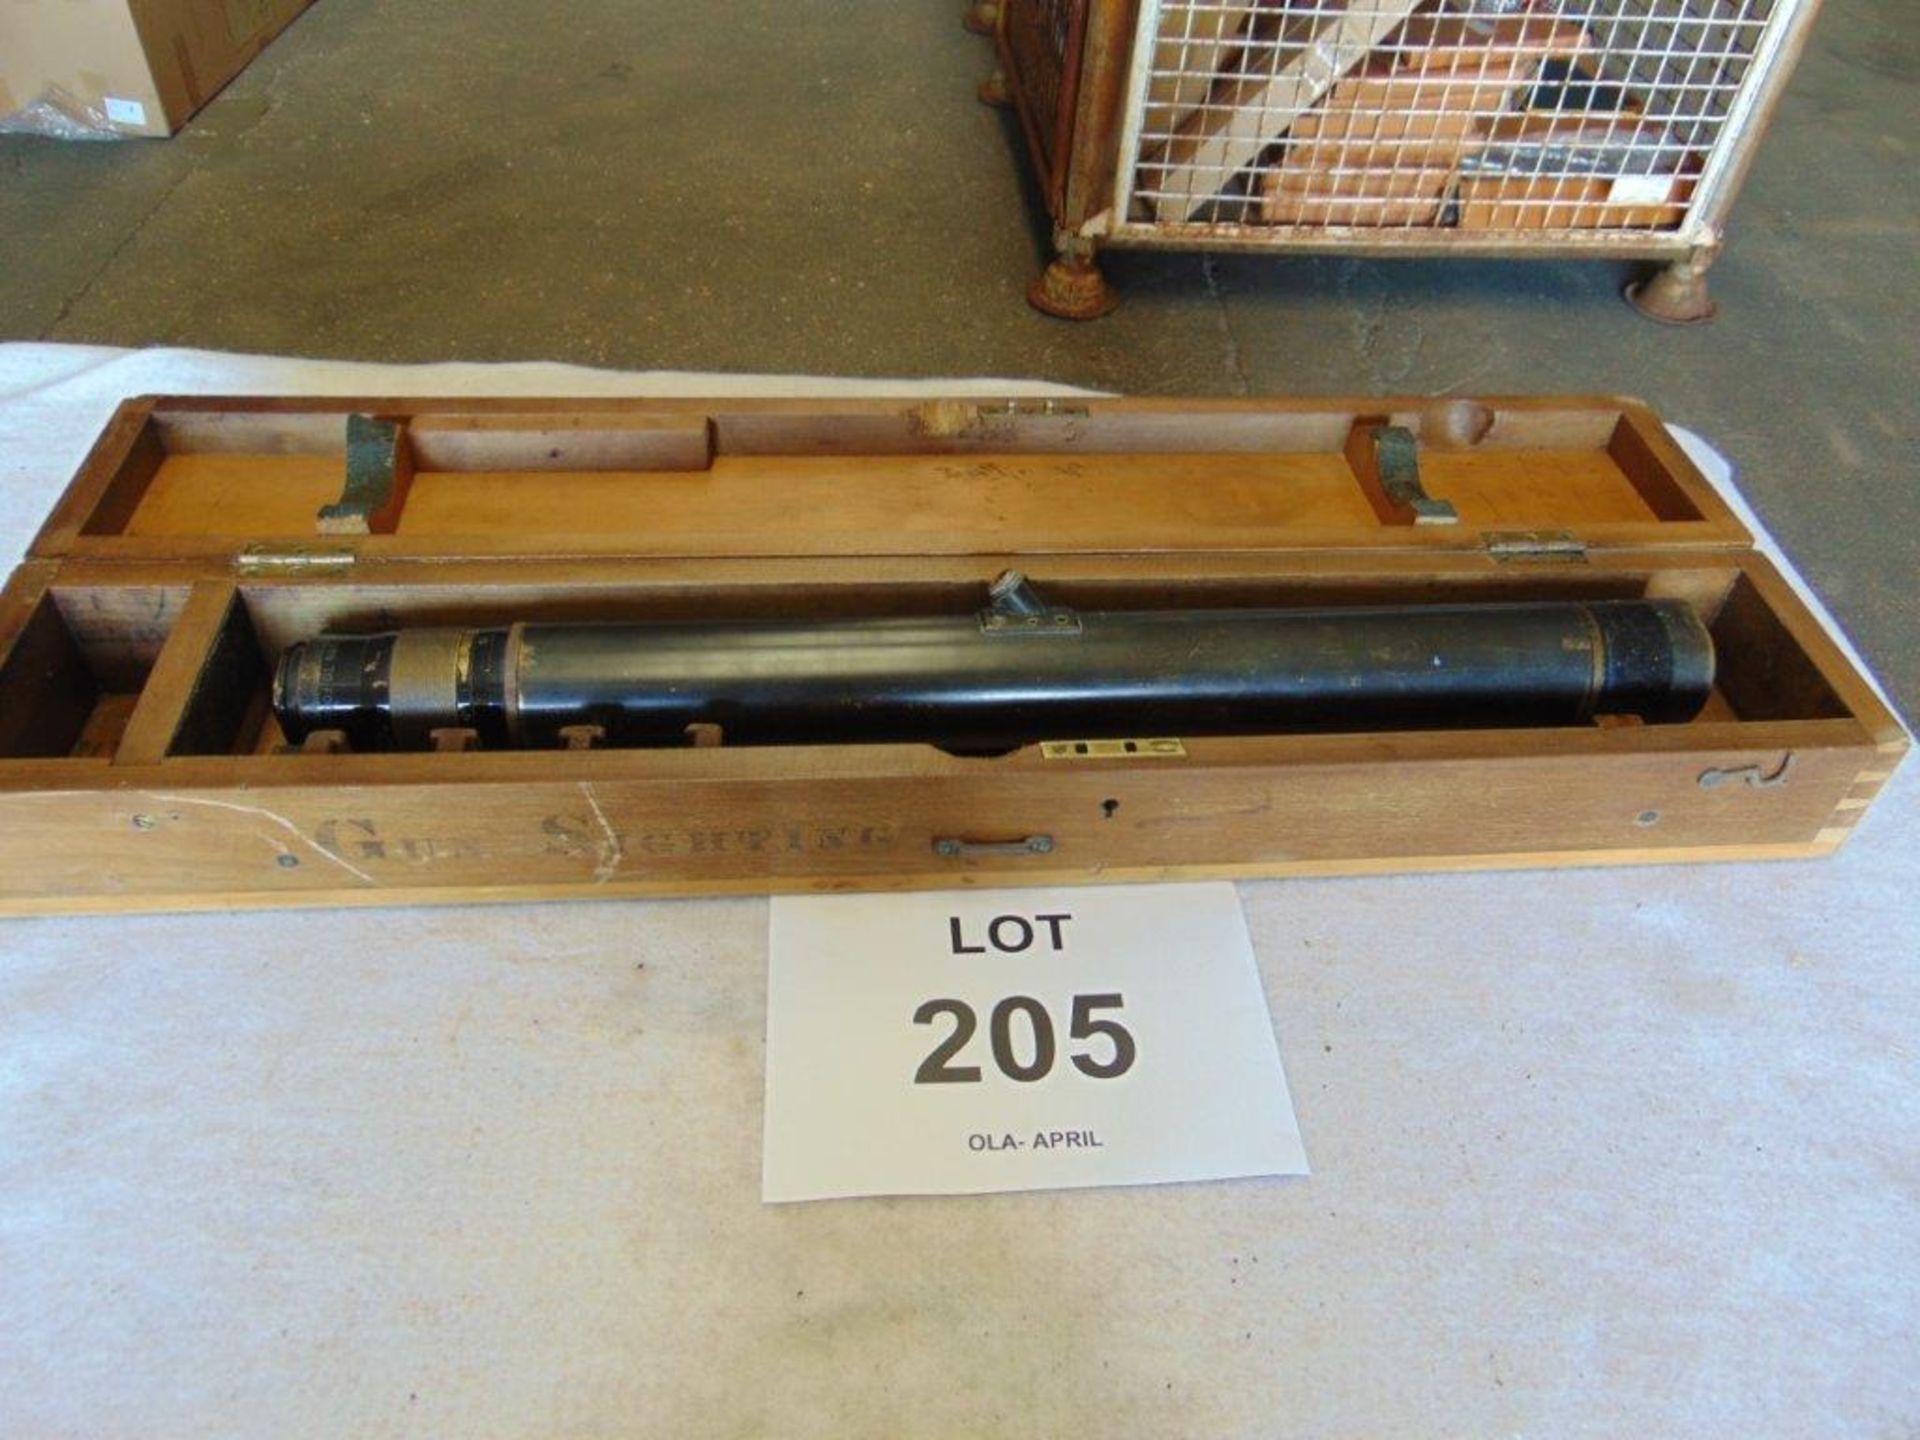 Gun Sighting Telescope in wooden box